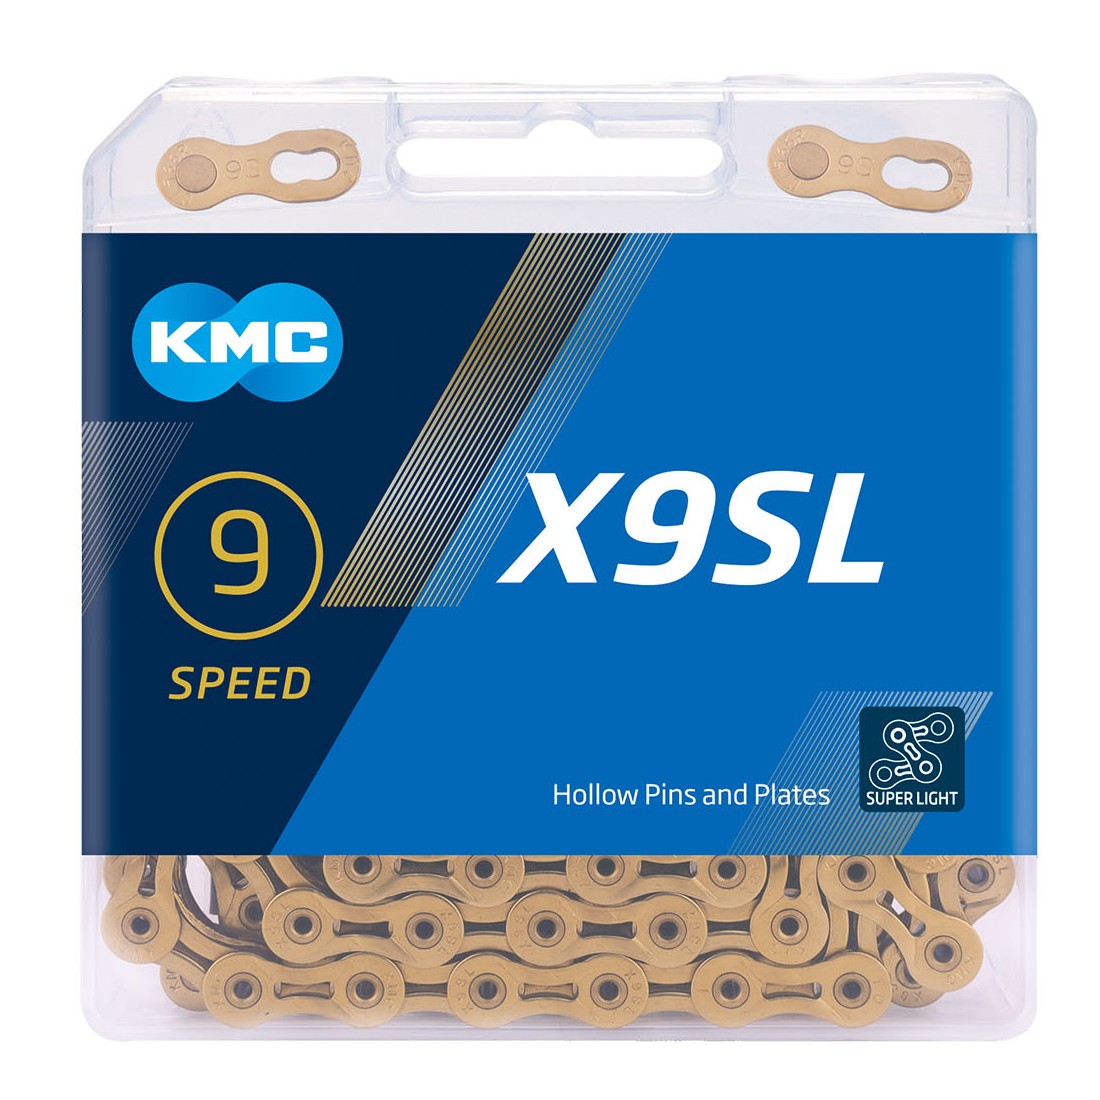 KMC X9SL Super Light 9-Speed Bike Chain 116 Links - Gold